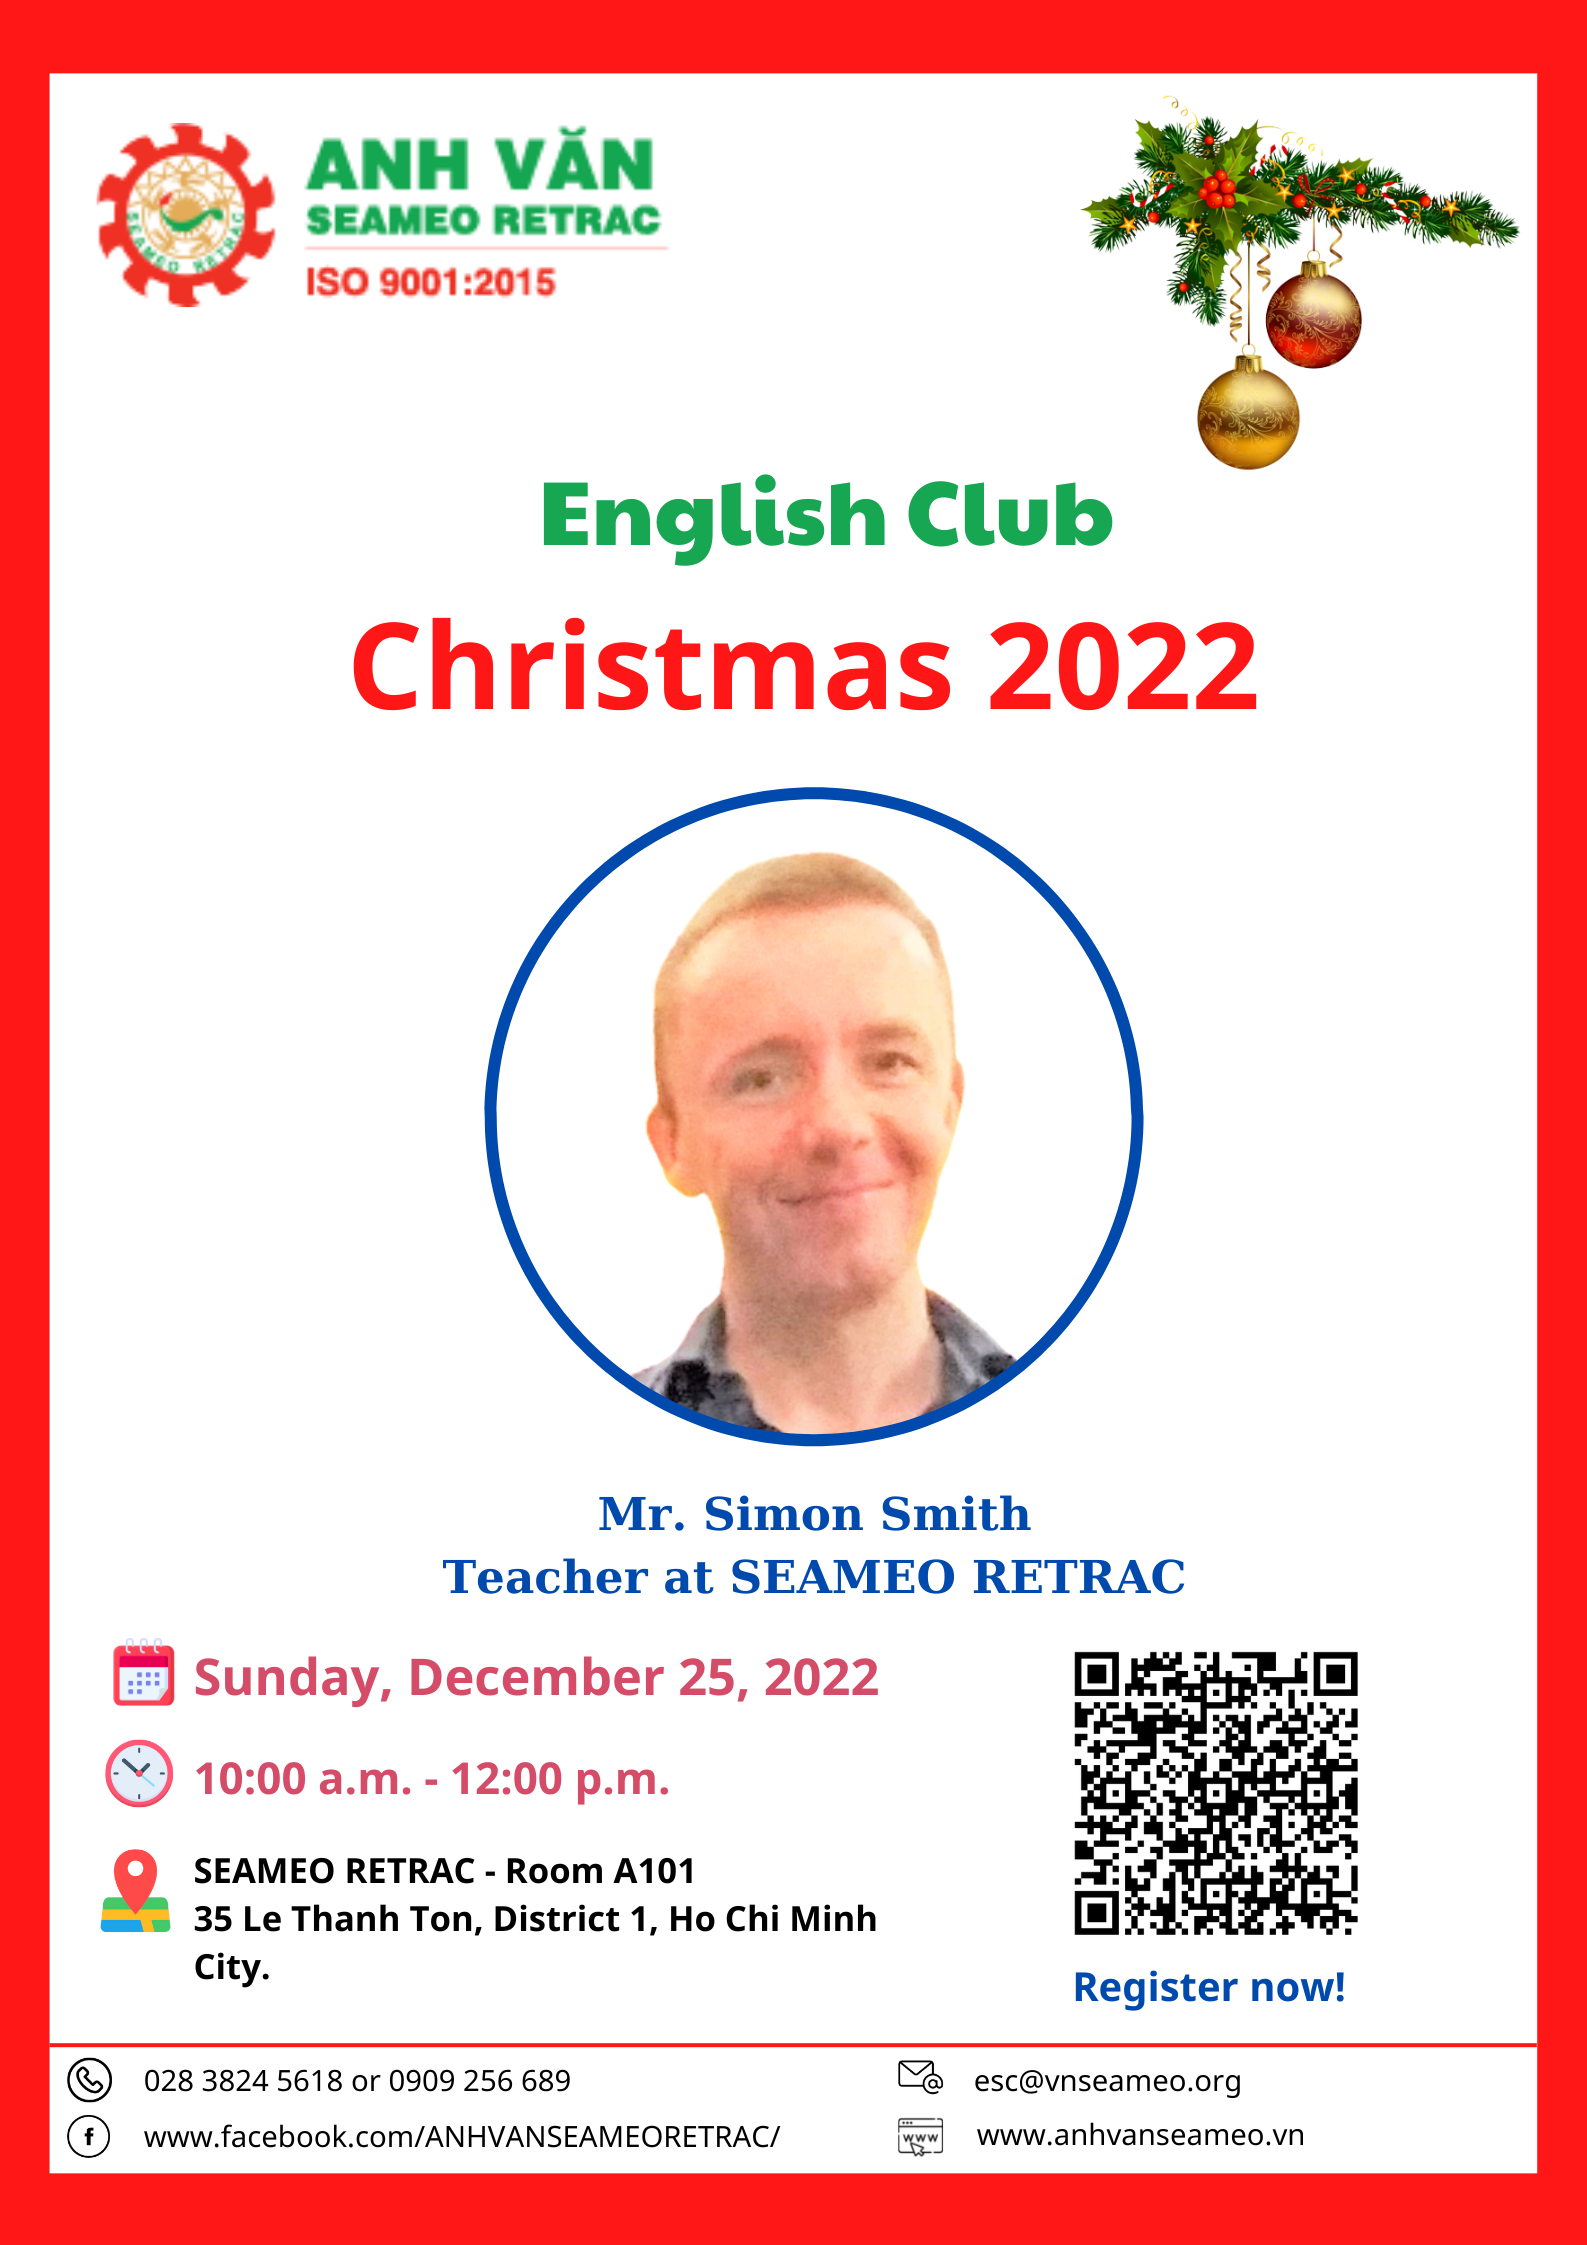 English club titled “Christmas 2022”